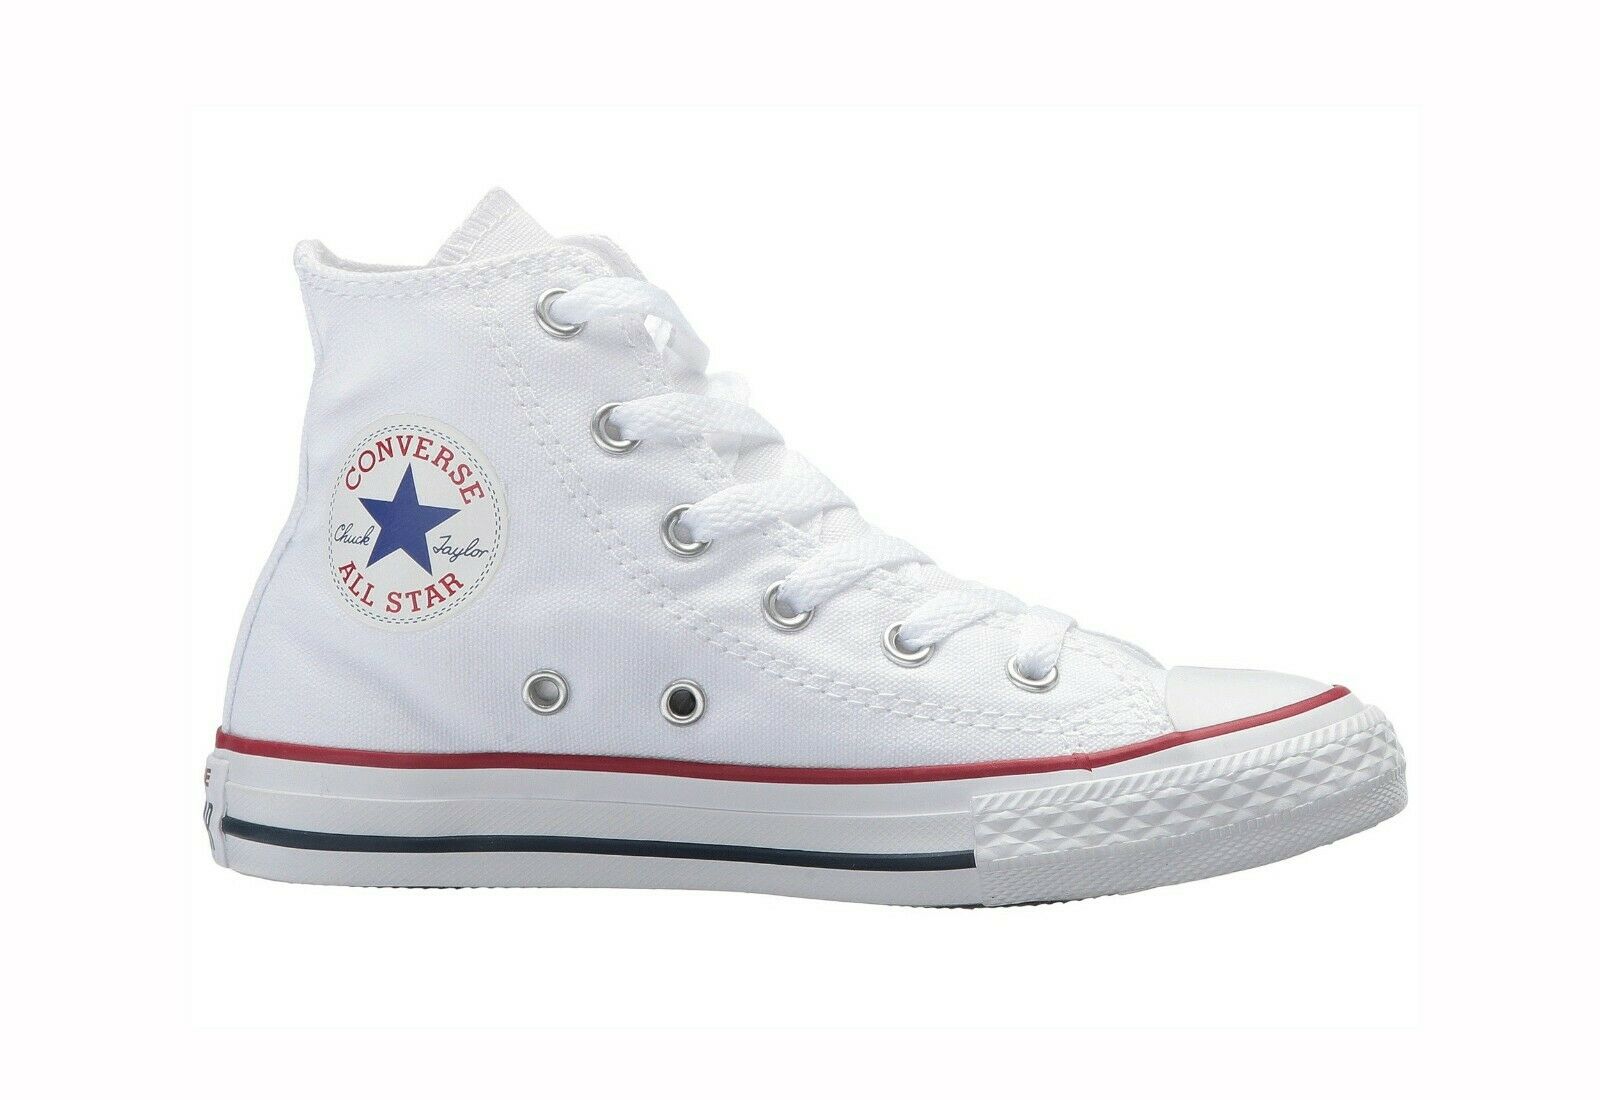 Converse Chuck Taylor All Star High Top Canvas Girls Shoes 3j253 - Optical White